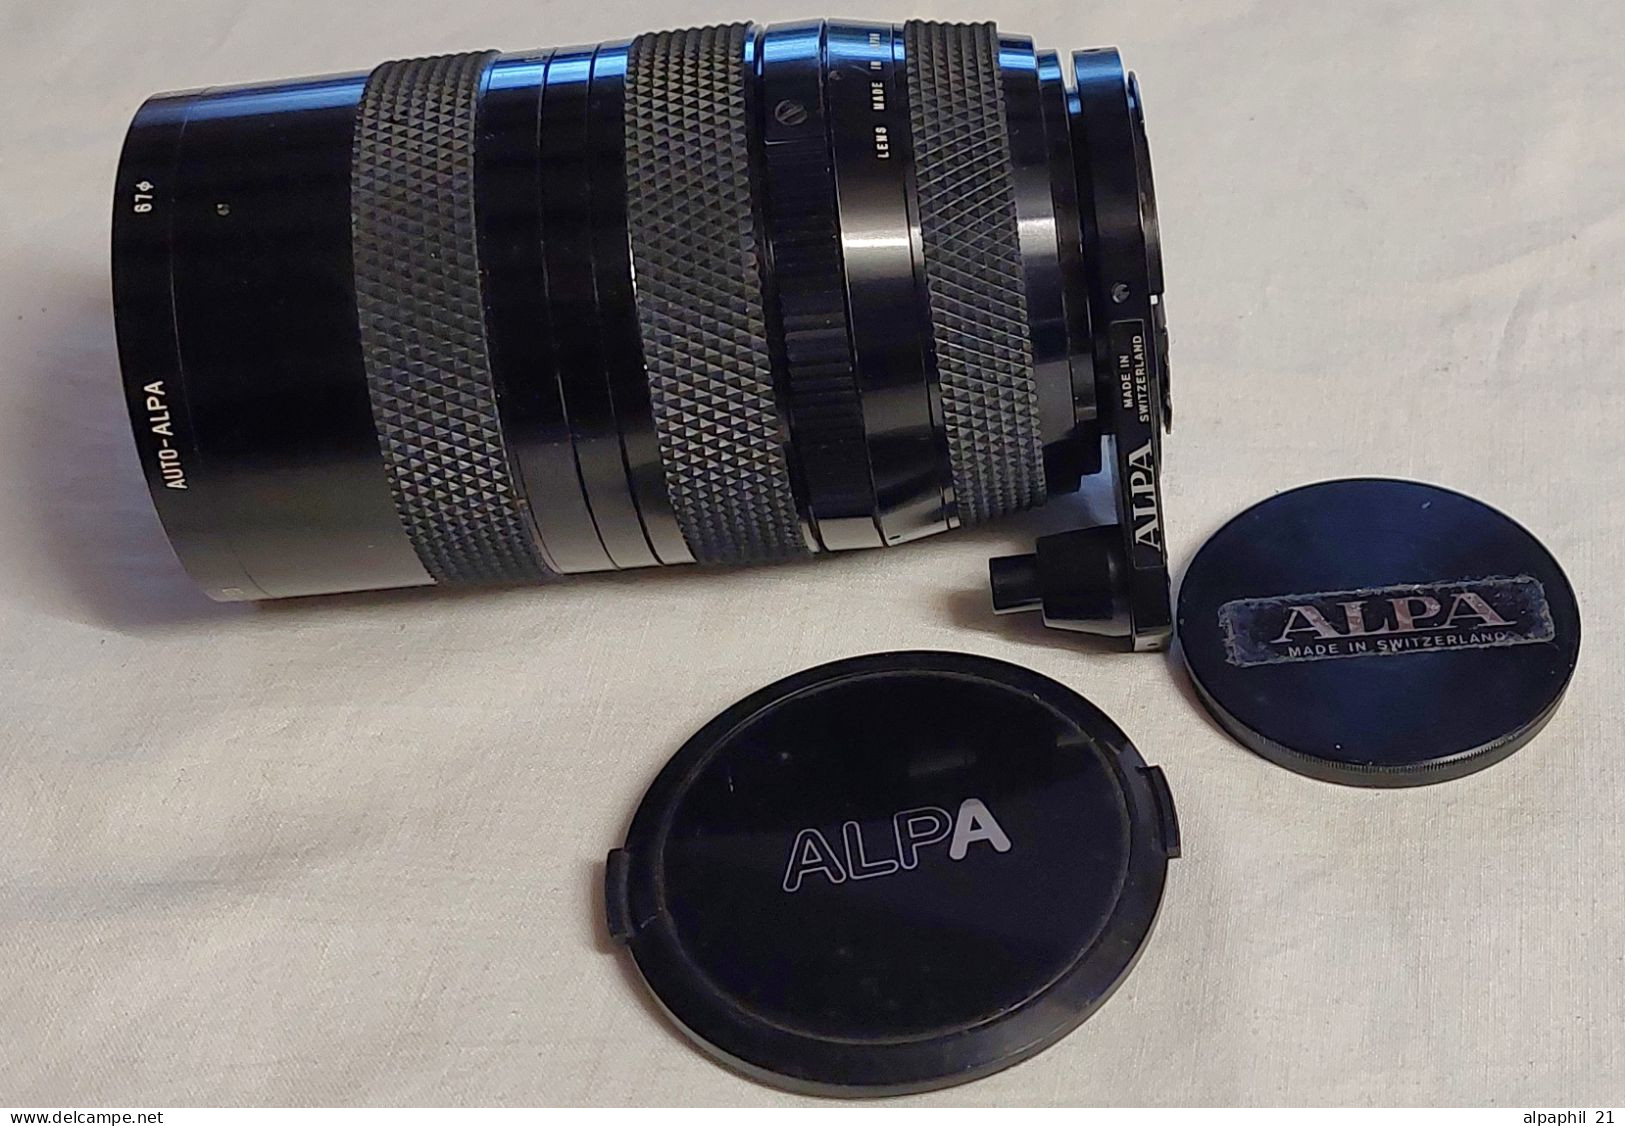 Auto-Alpa Zoom Lens Ø 42 Mm 1:3.5/40~105 With AUTOBAG - Zubehör & Material